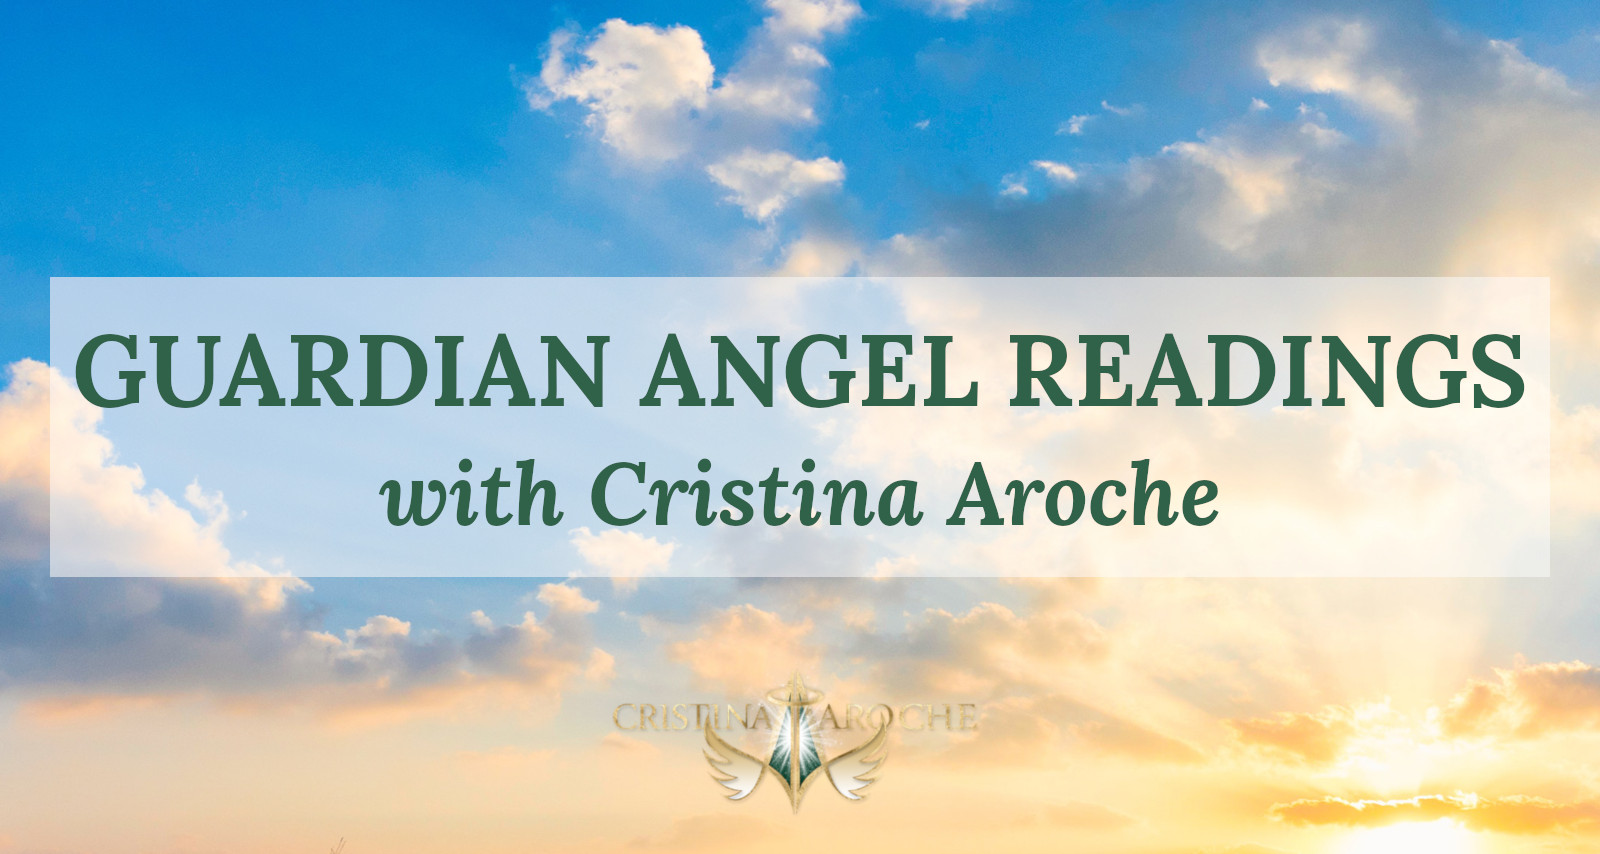 Cristina Aroche - Guardian Angel Readings 2022